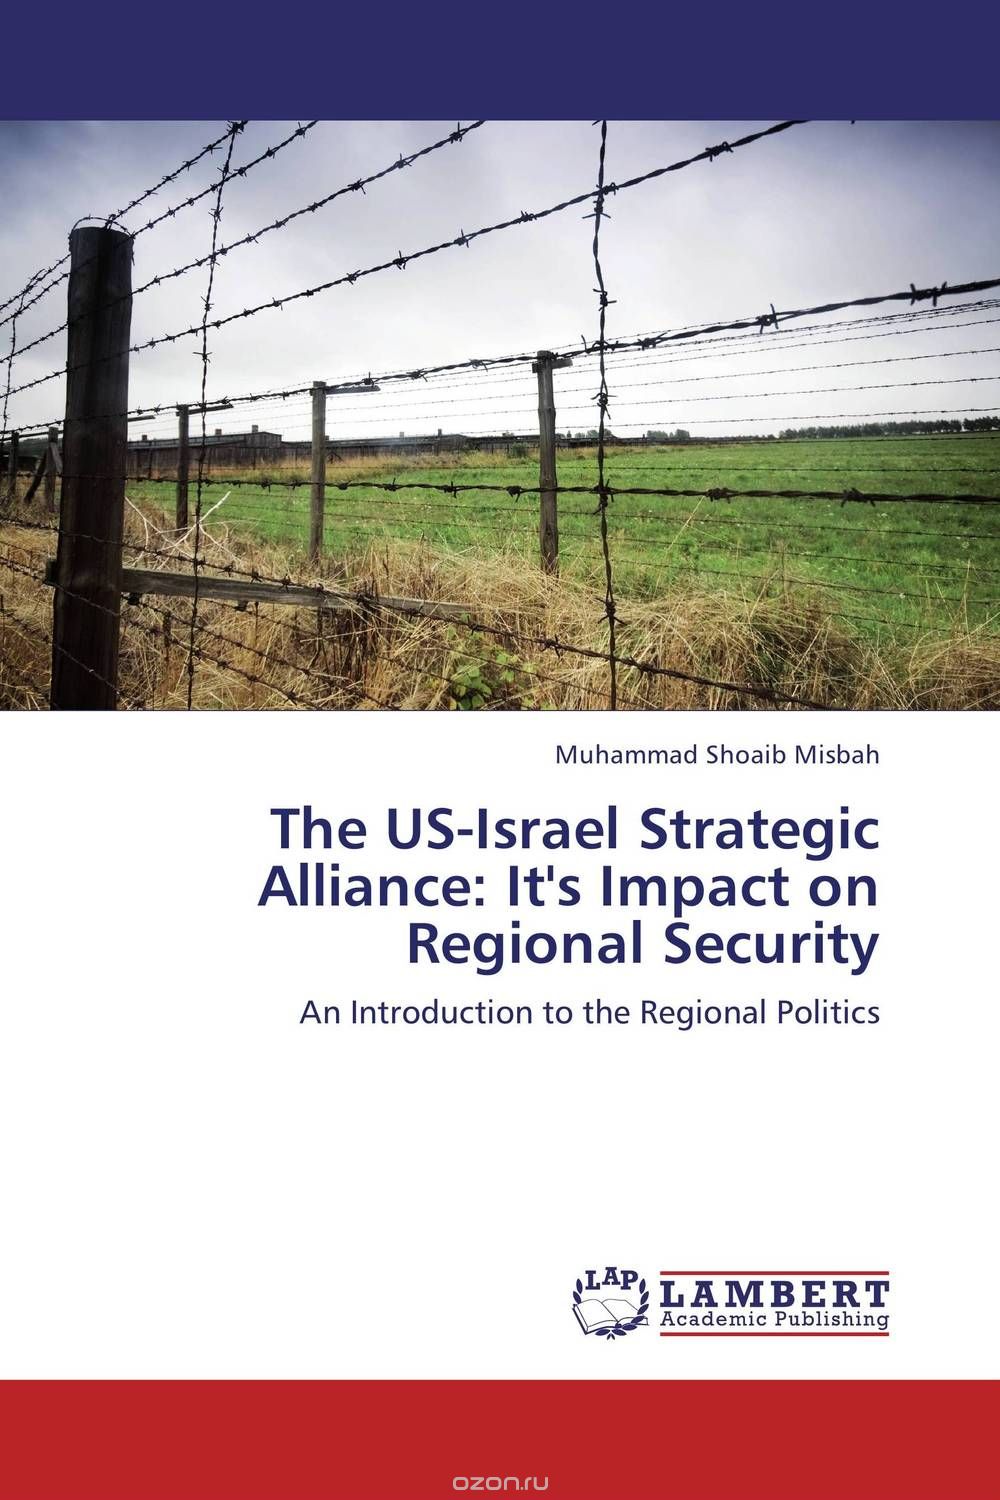 Скачать книгу "The US-Israel Strategic Alliance: It's Impact on Regional Security"